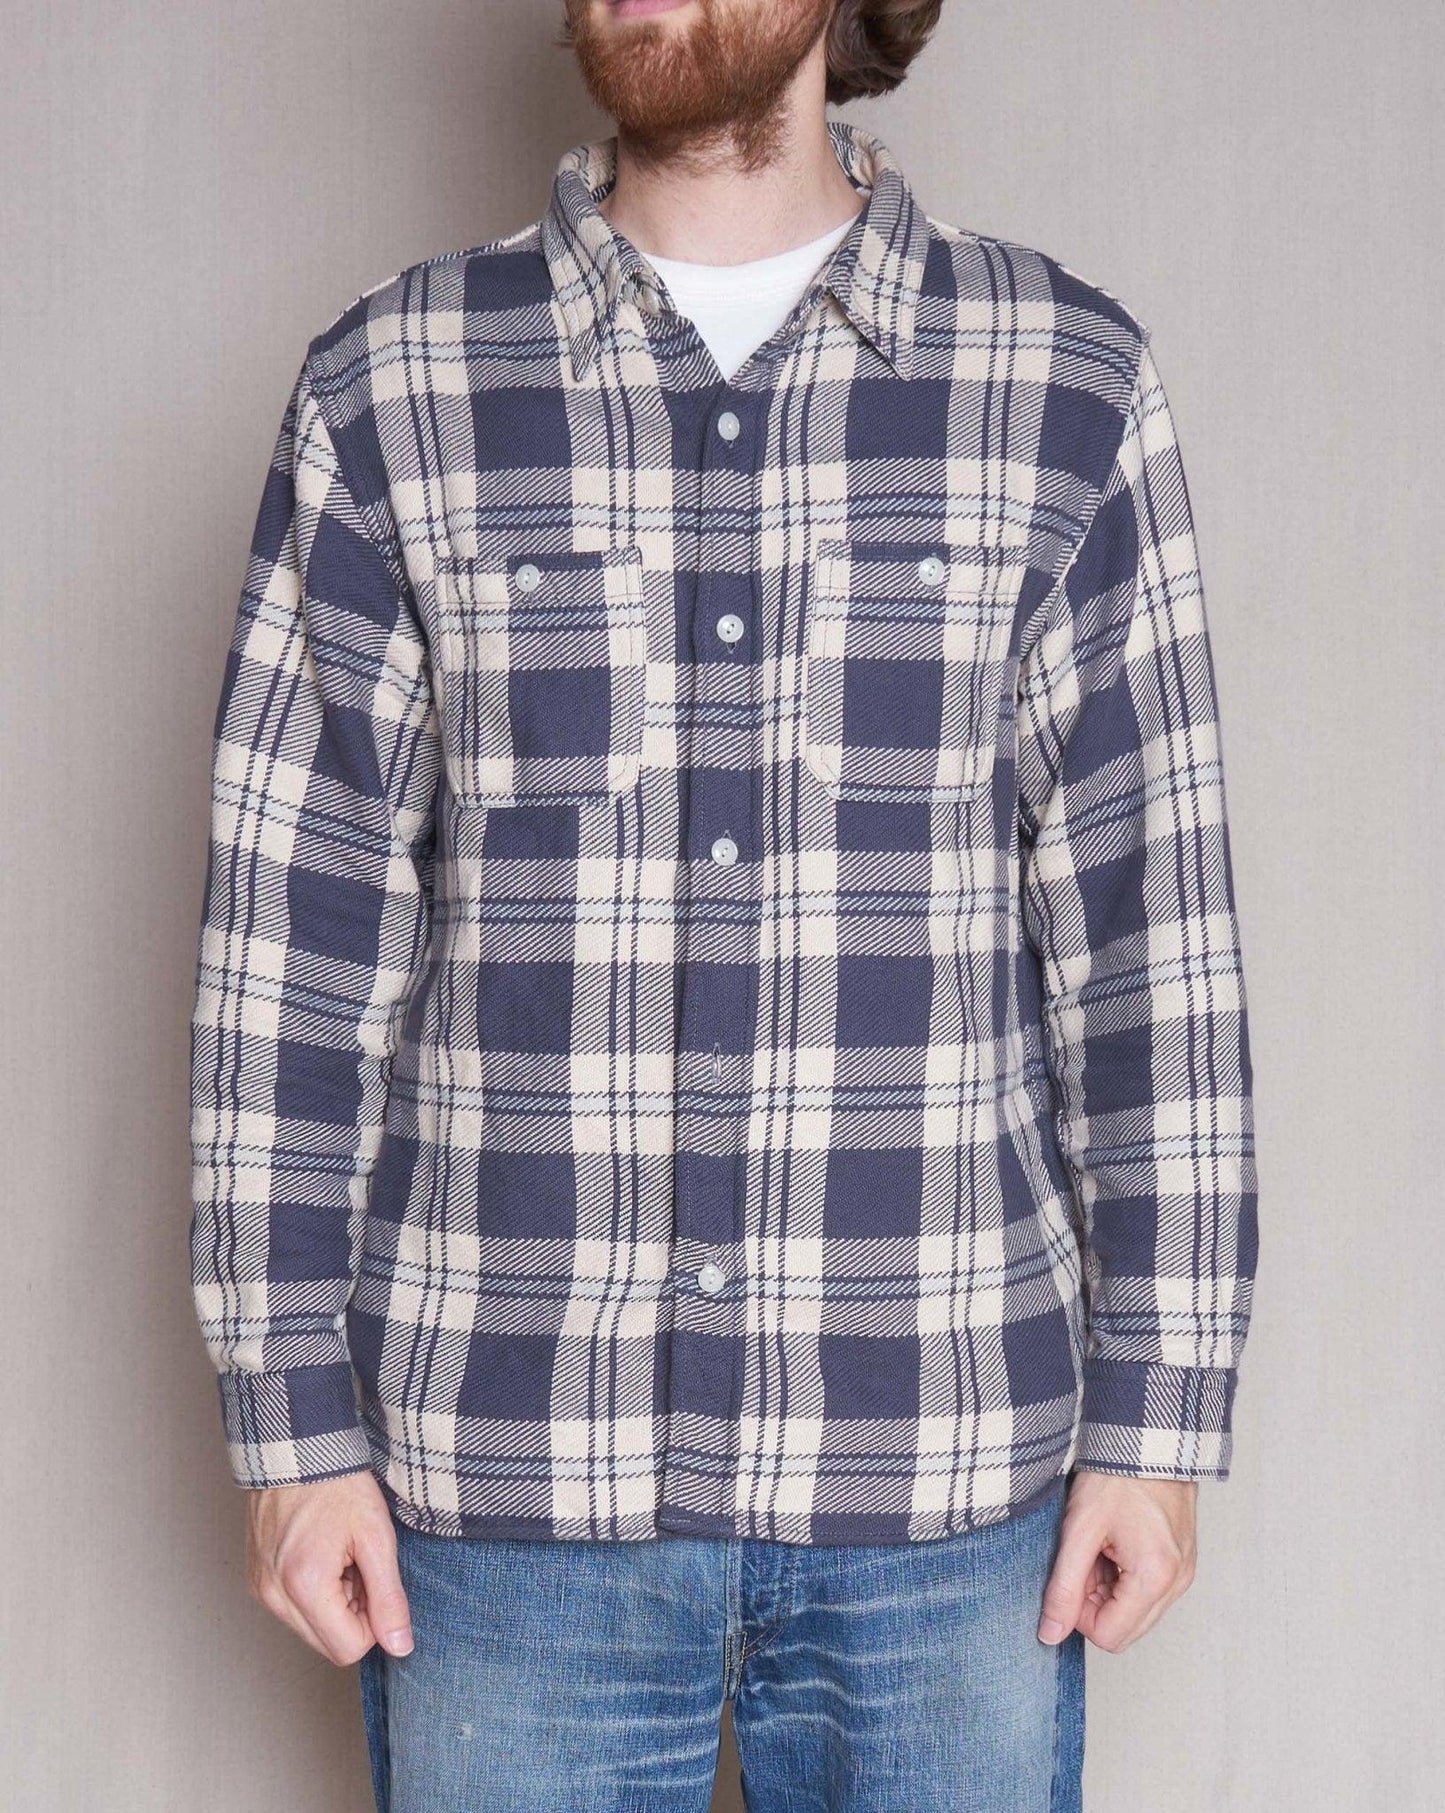 Fullcount Original Check Cotton Flannel Shirt - Navy -Fullcount - URAHARA